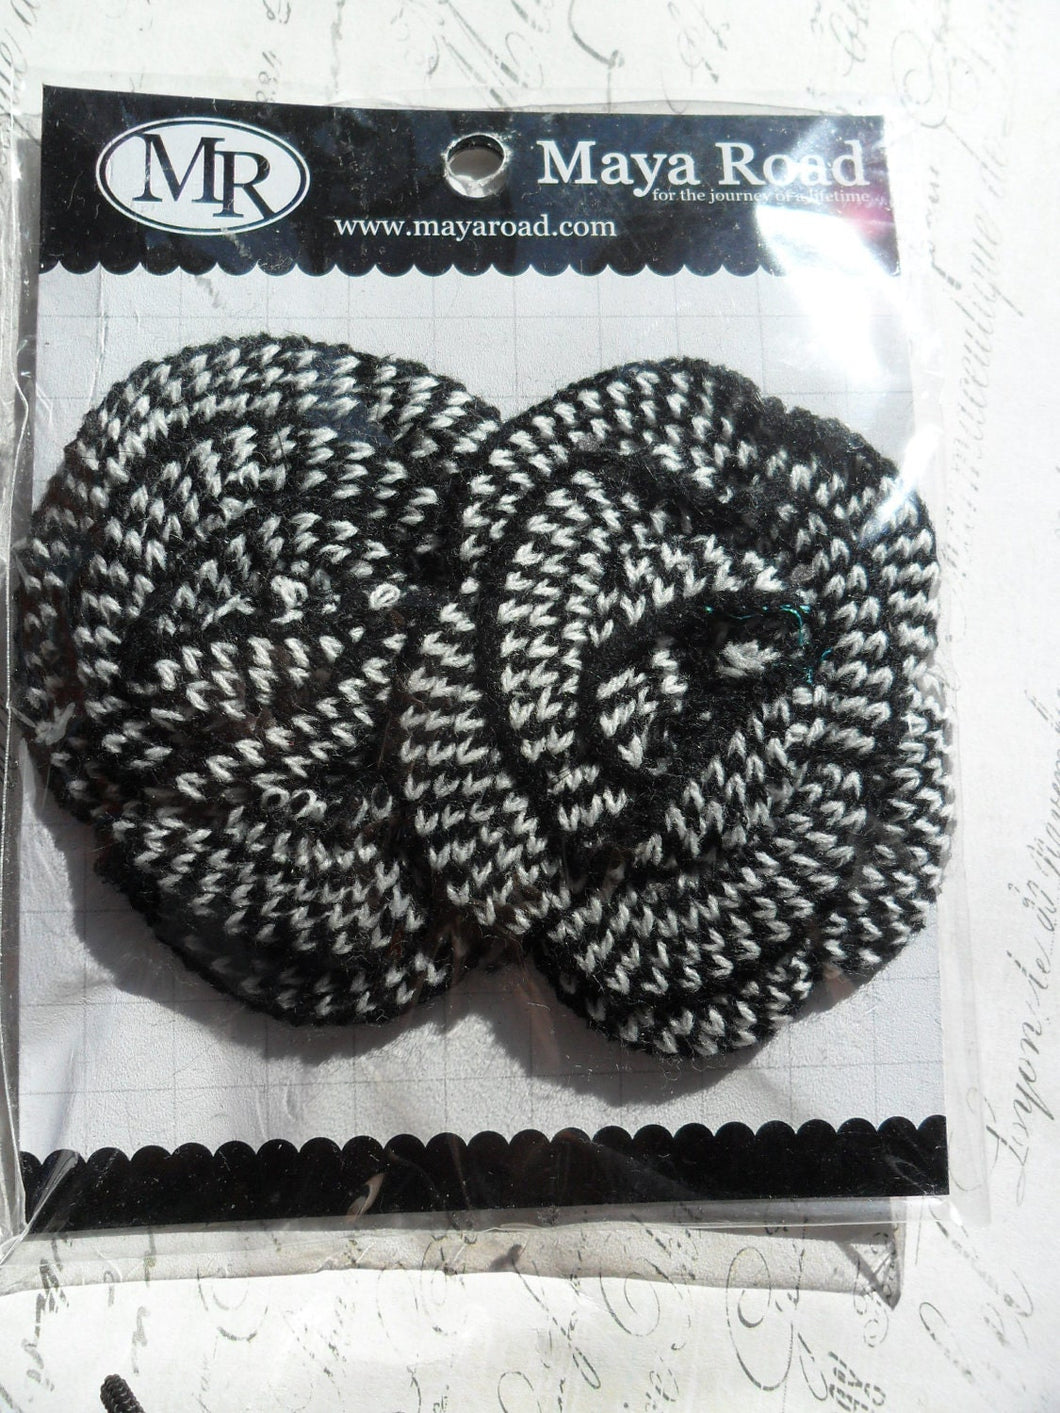 Maya Road Winter's Roses Black and White Herringbone Sweater knit